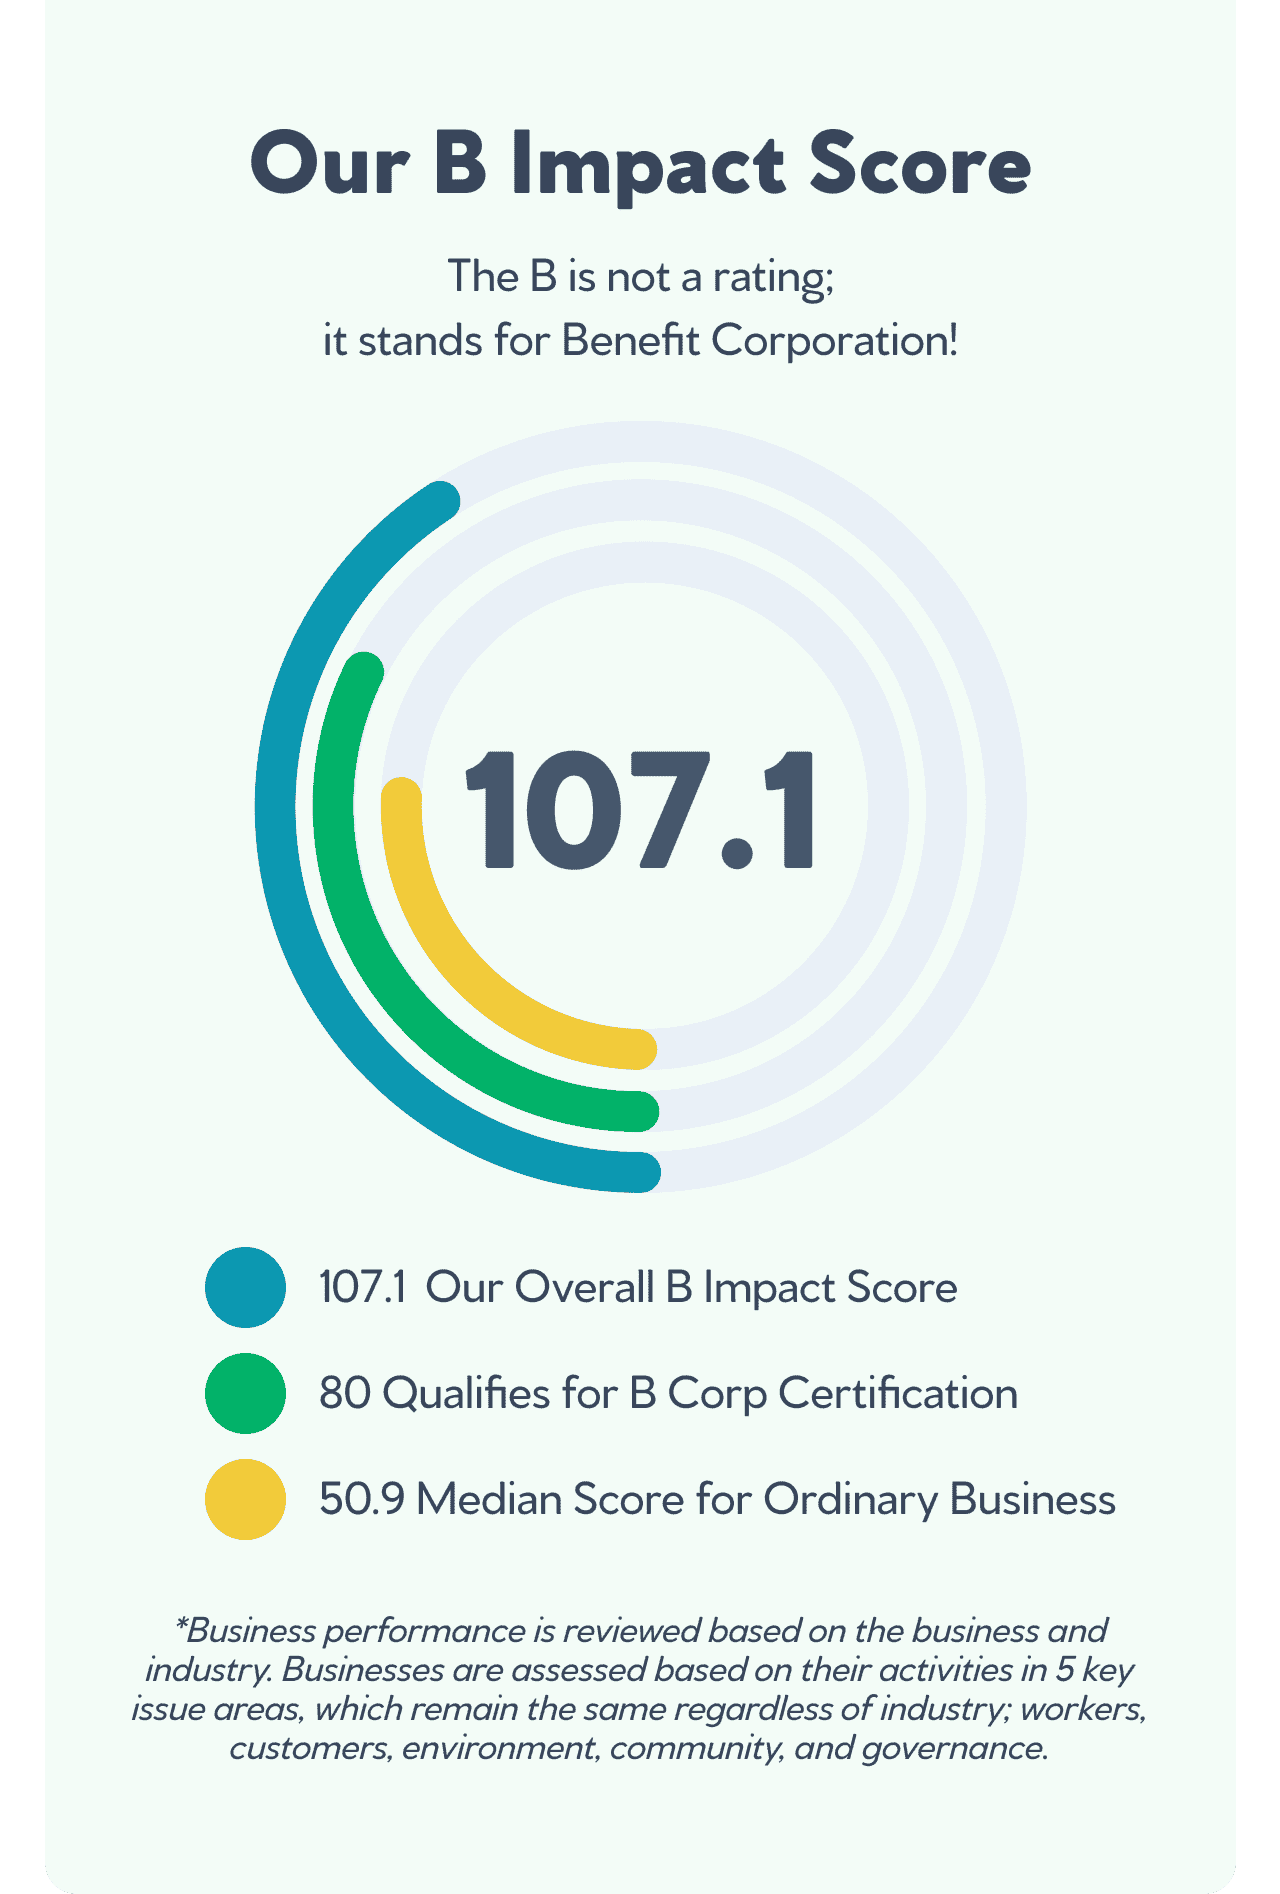 Our B Impact Score